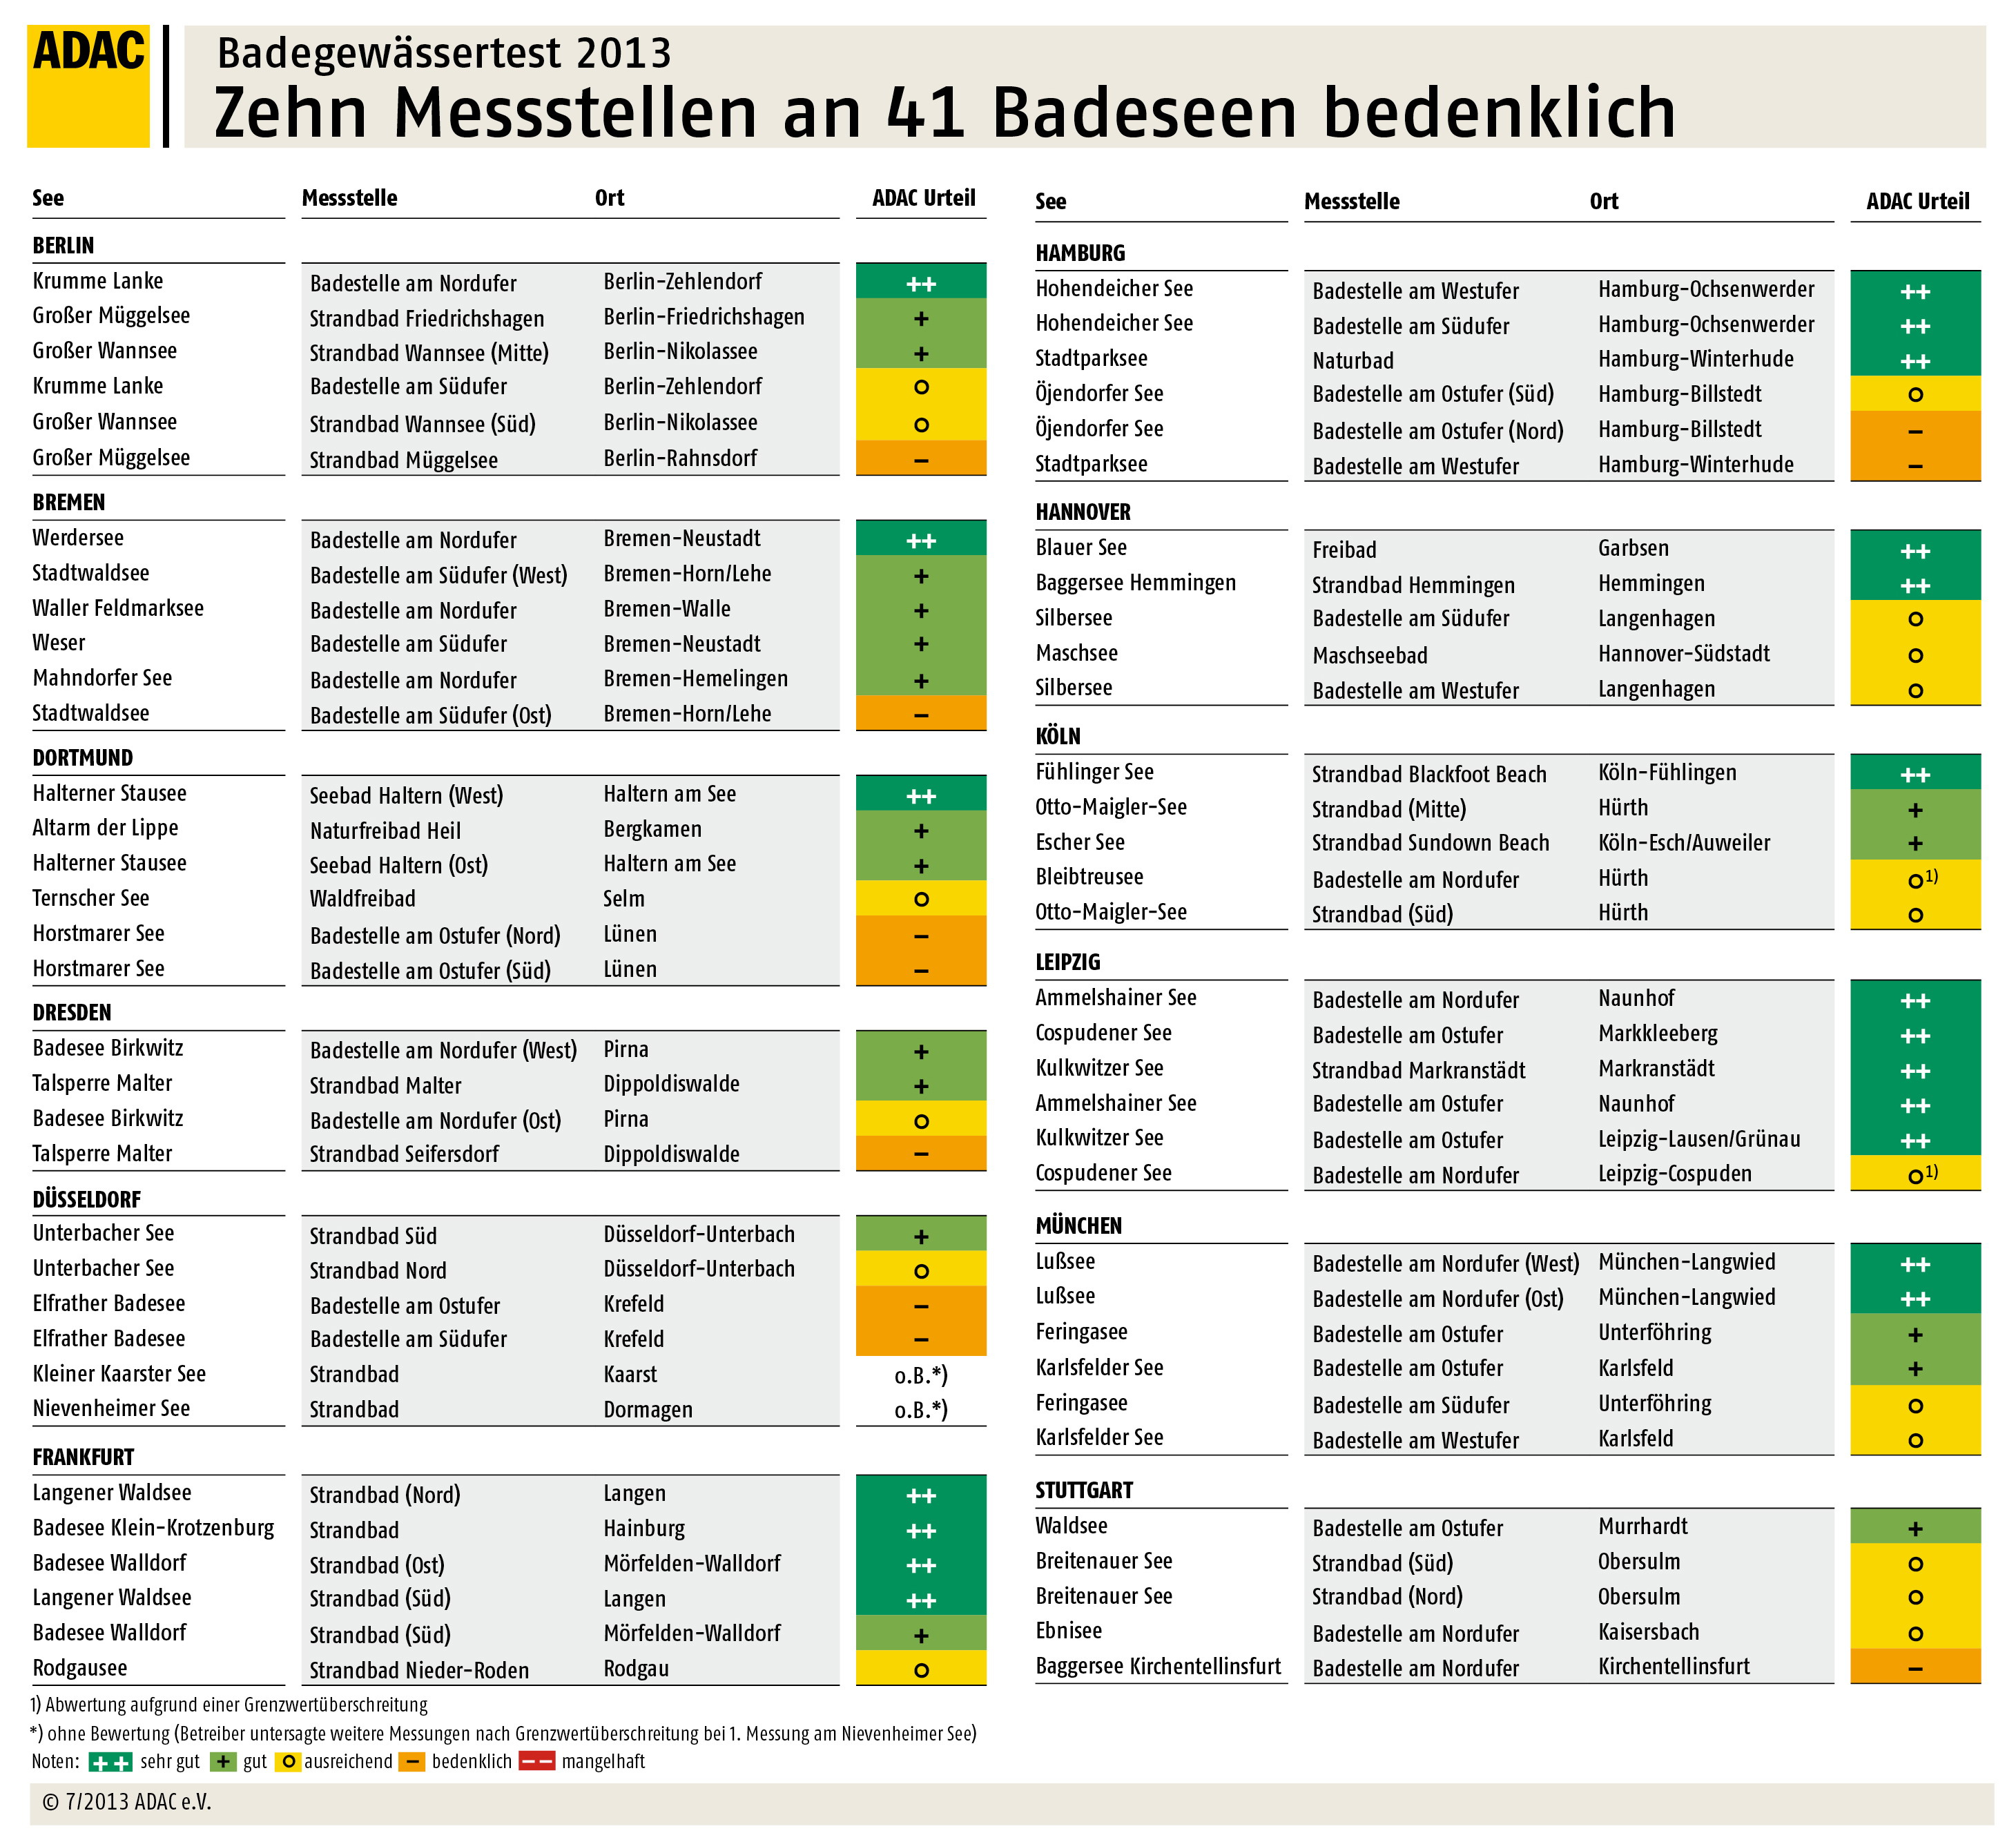 ADAC Badegewässertest 2013 -  Grafik 2